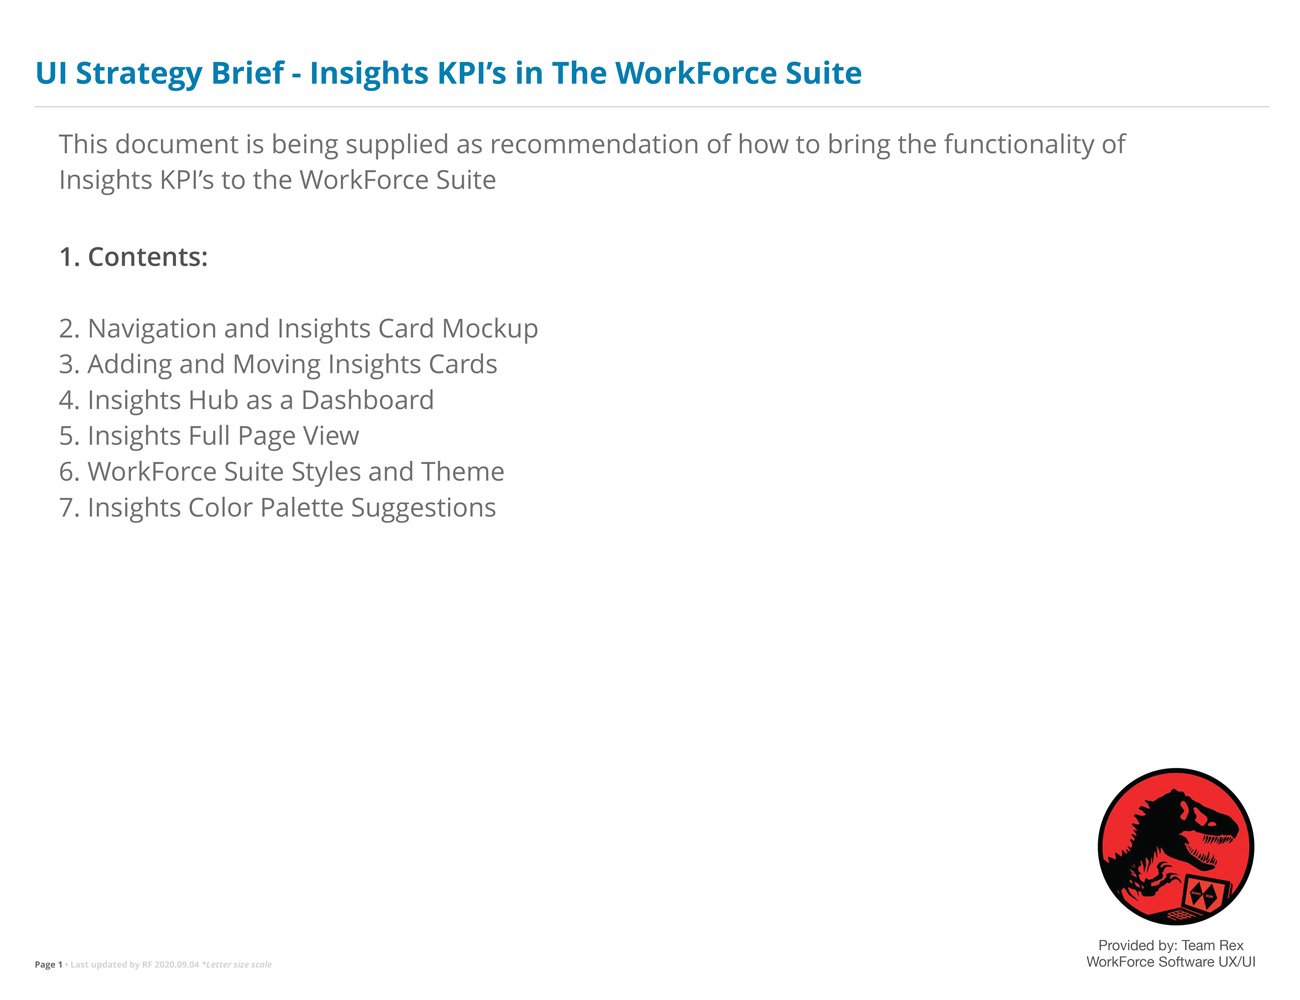 UI-Strategy-Brief-Insight-KPIs-2020-09-04-1.jpg